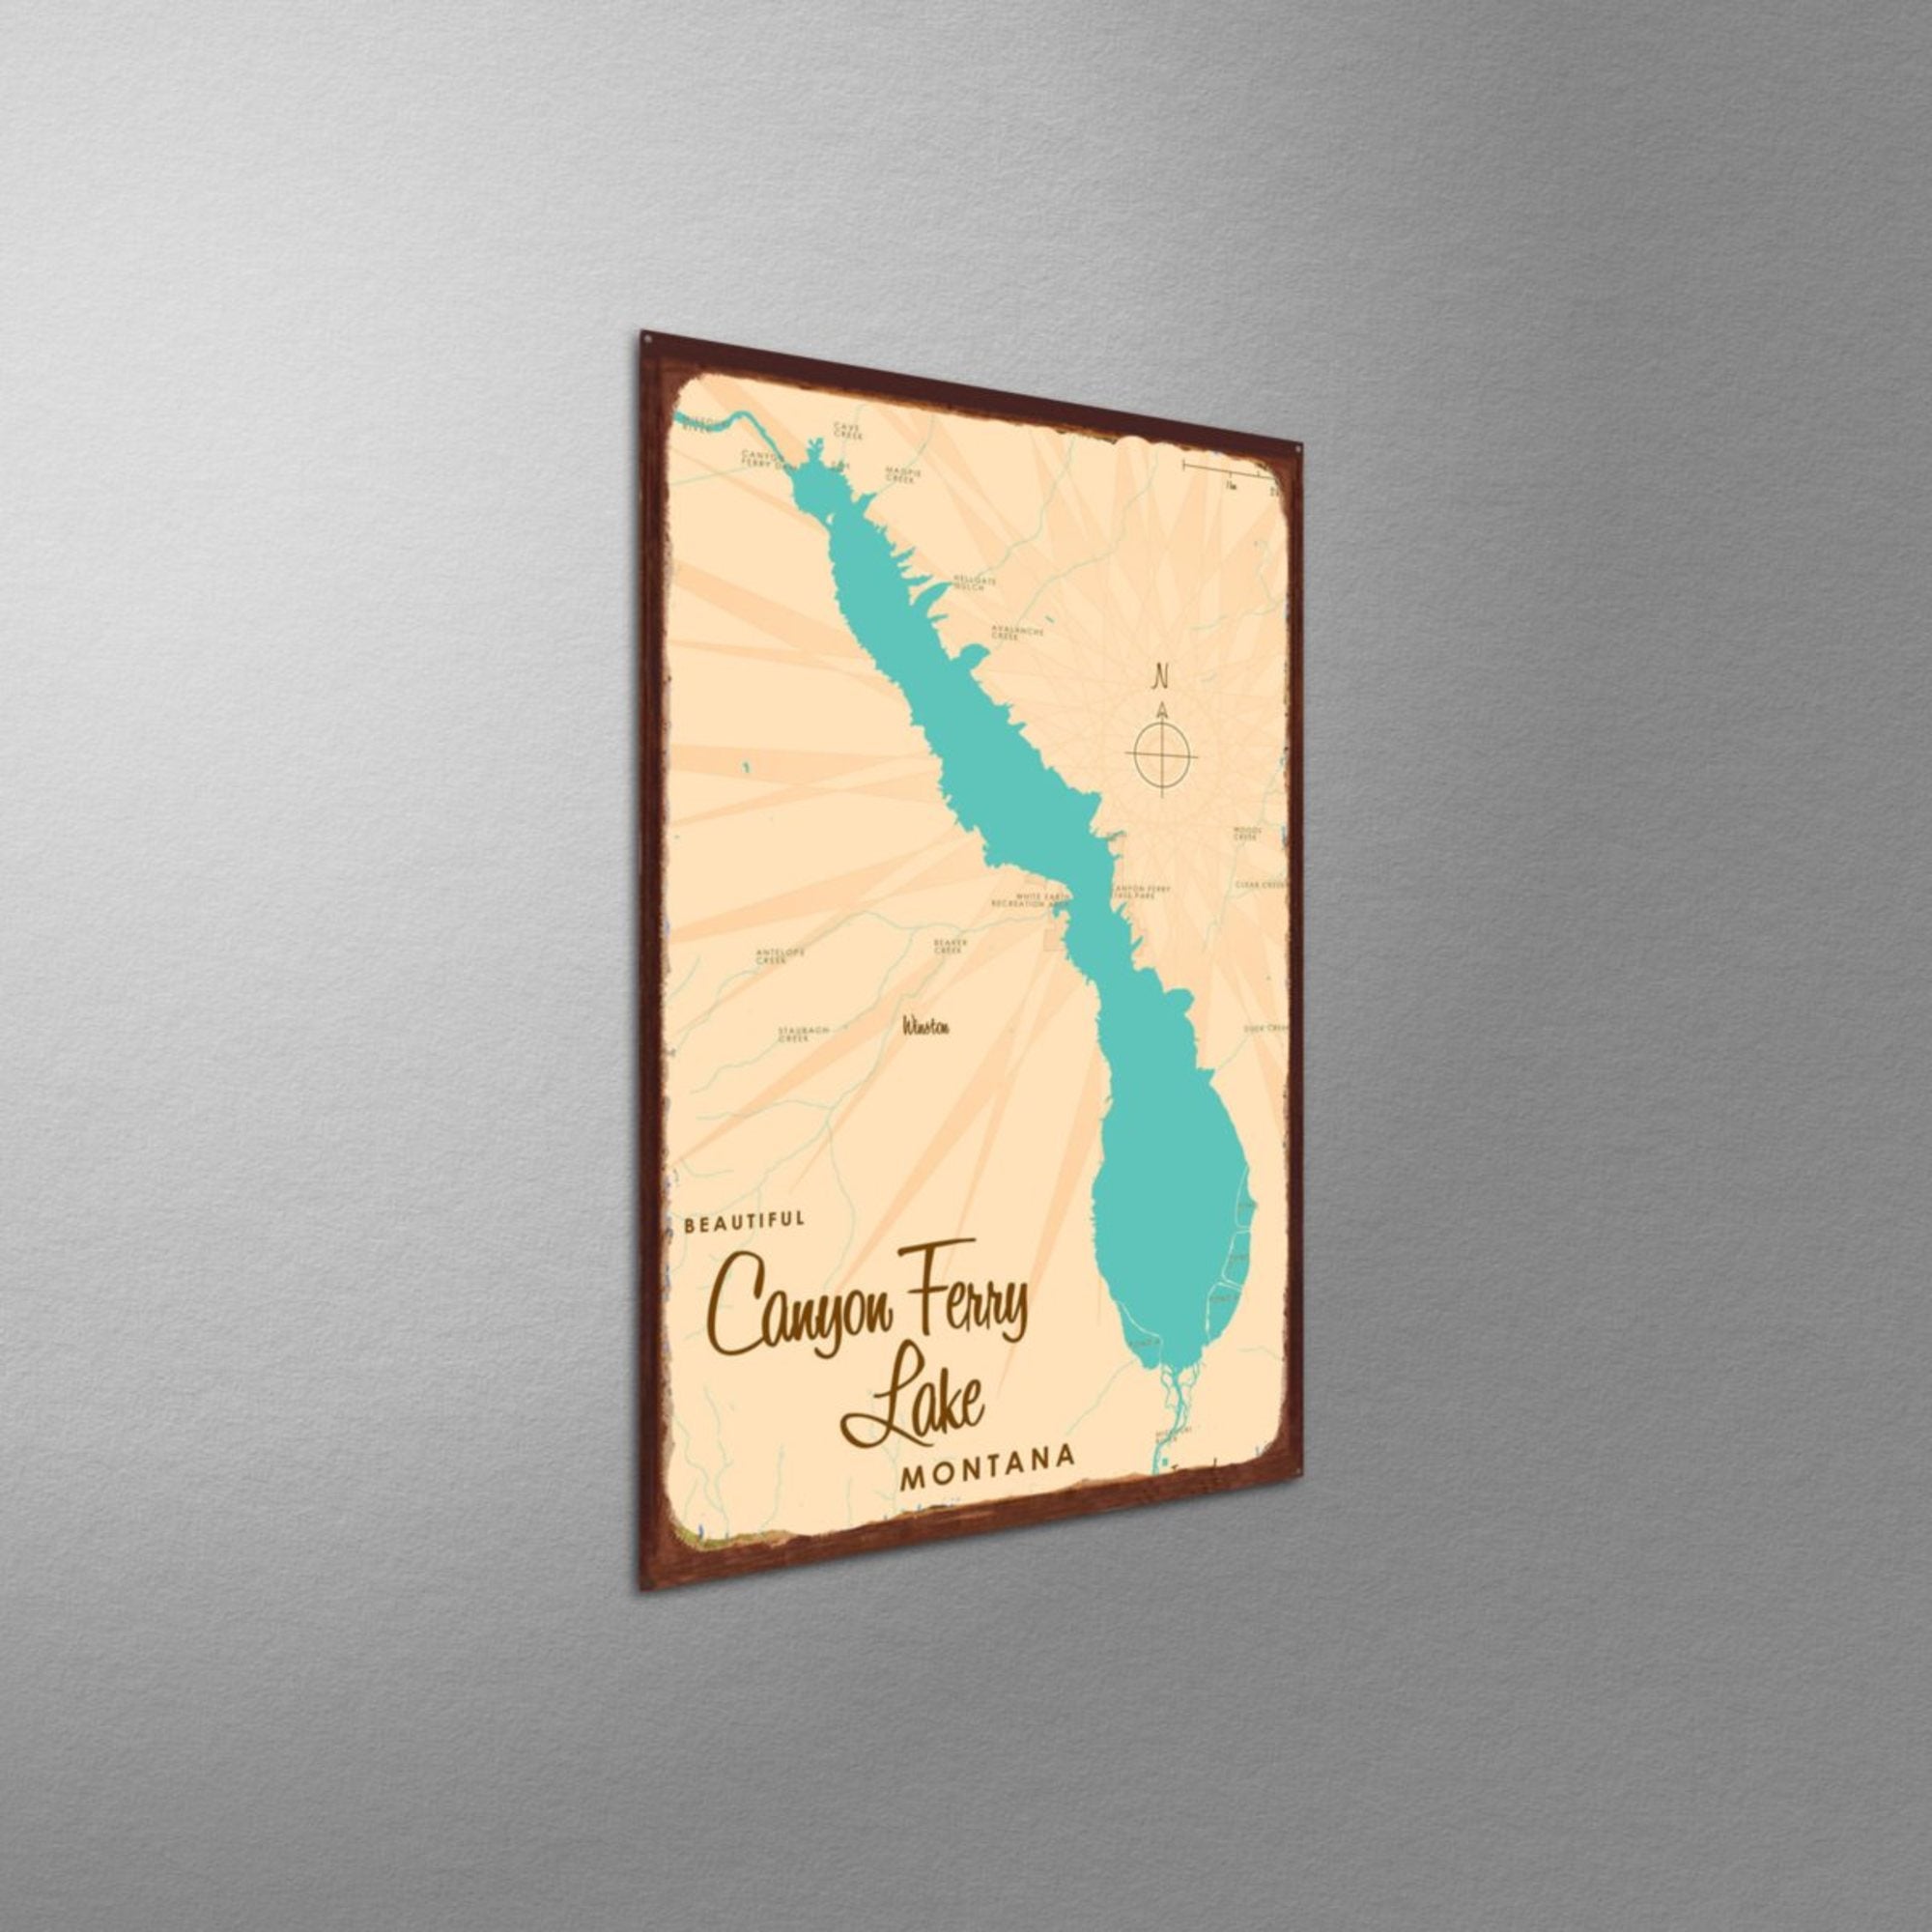 Canyon Ferry Lake Montana, Rustic Metal Sign Map Art